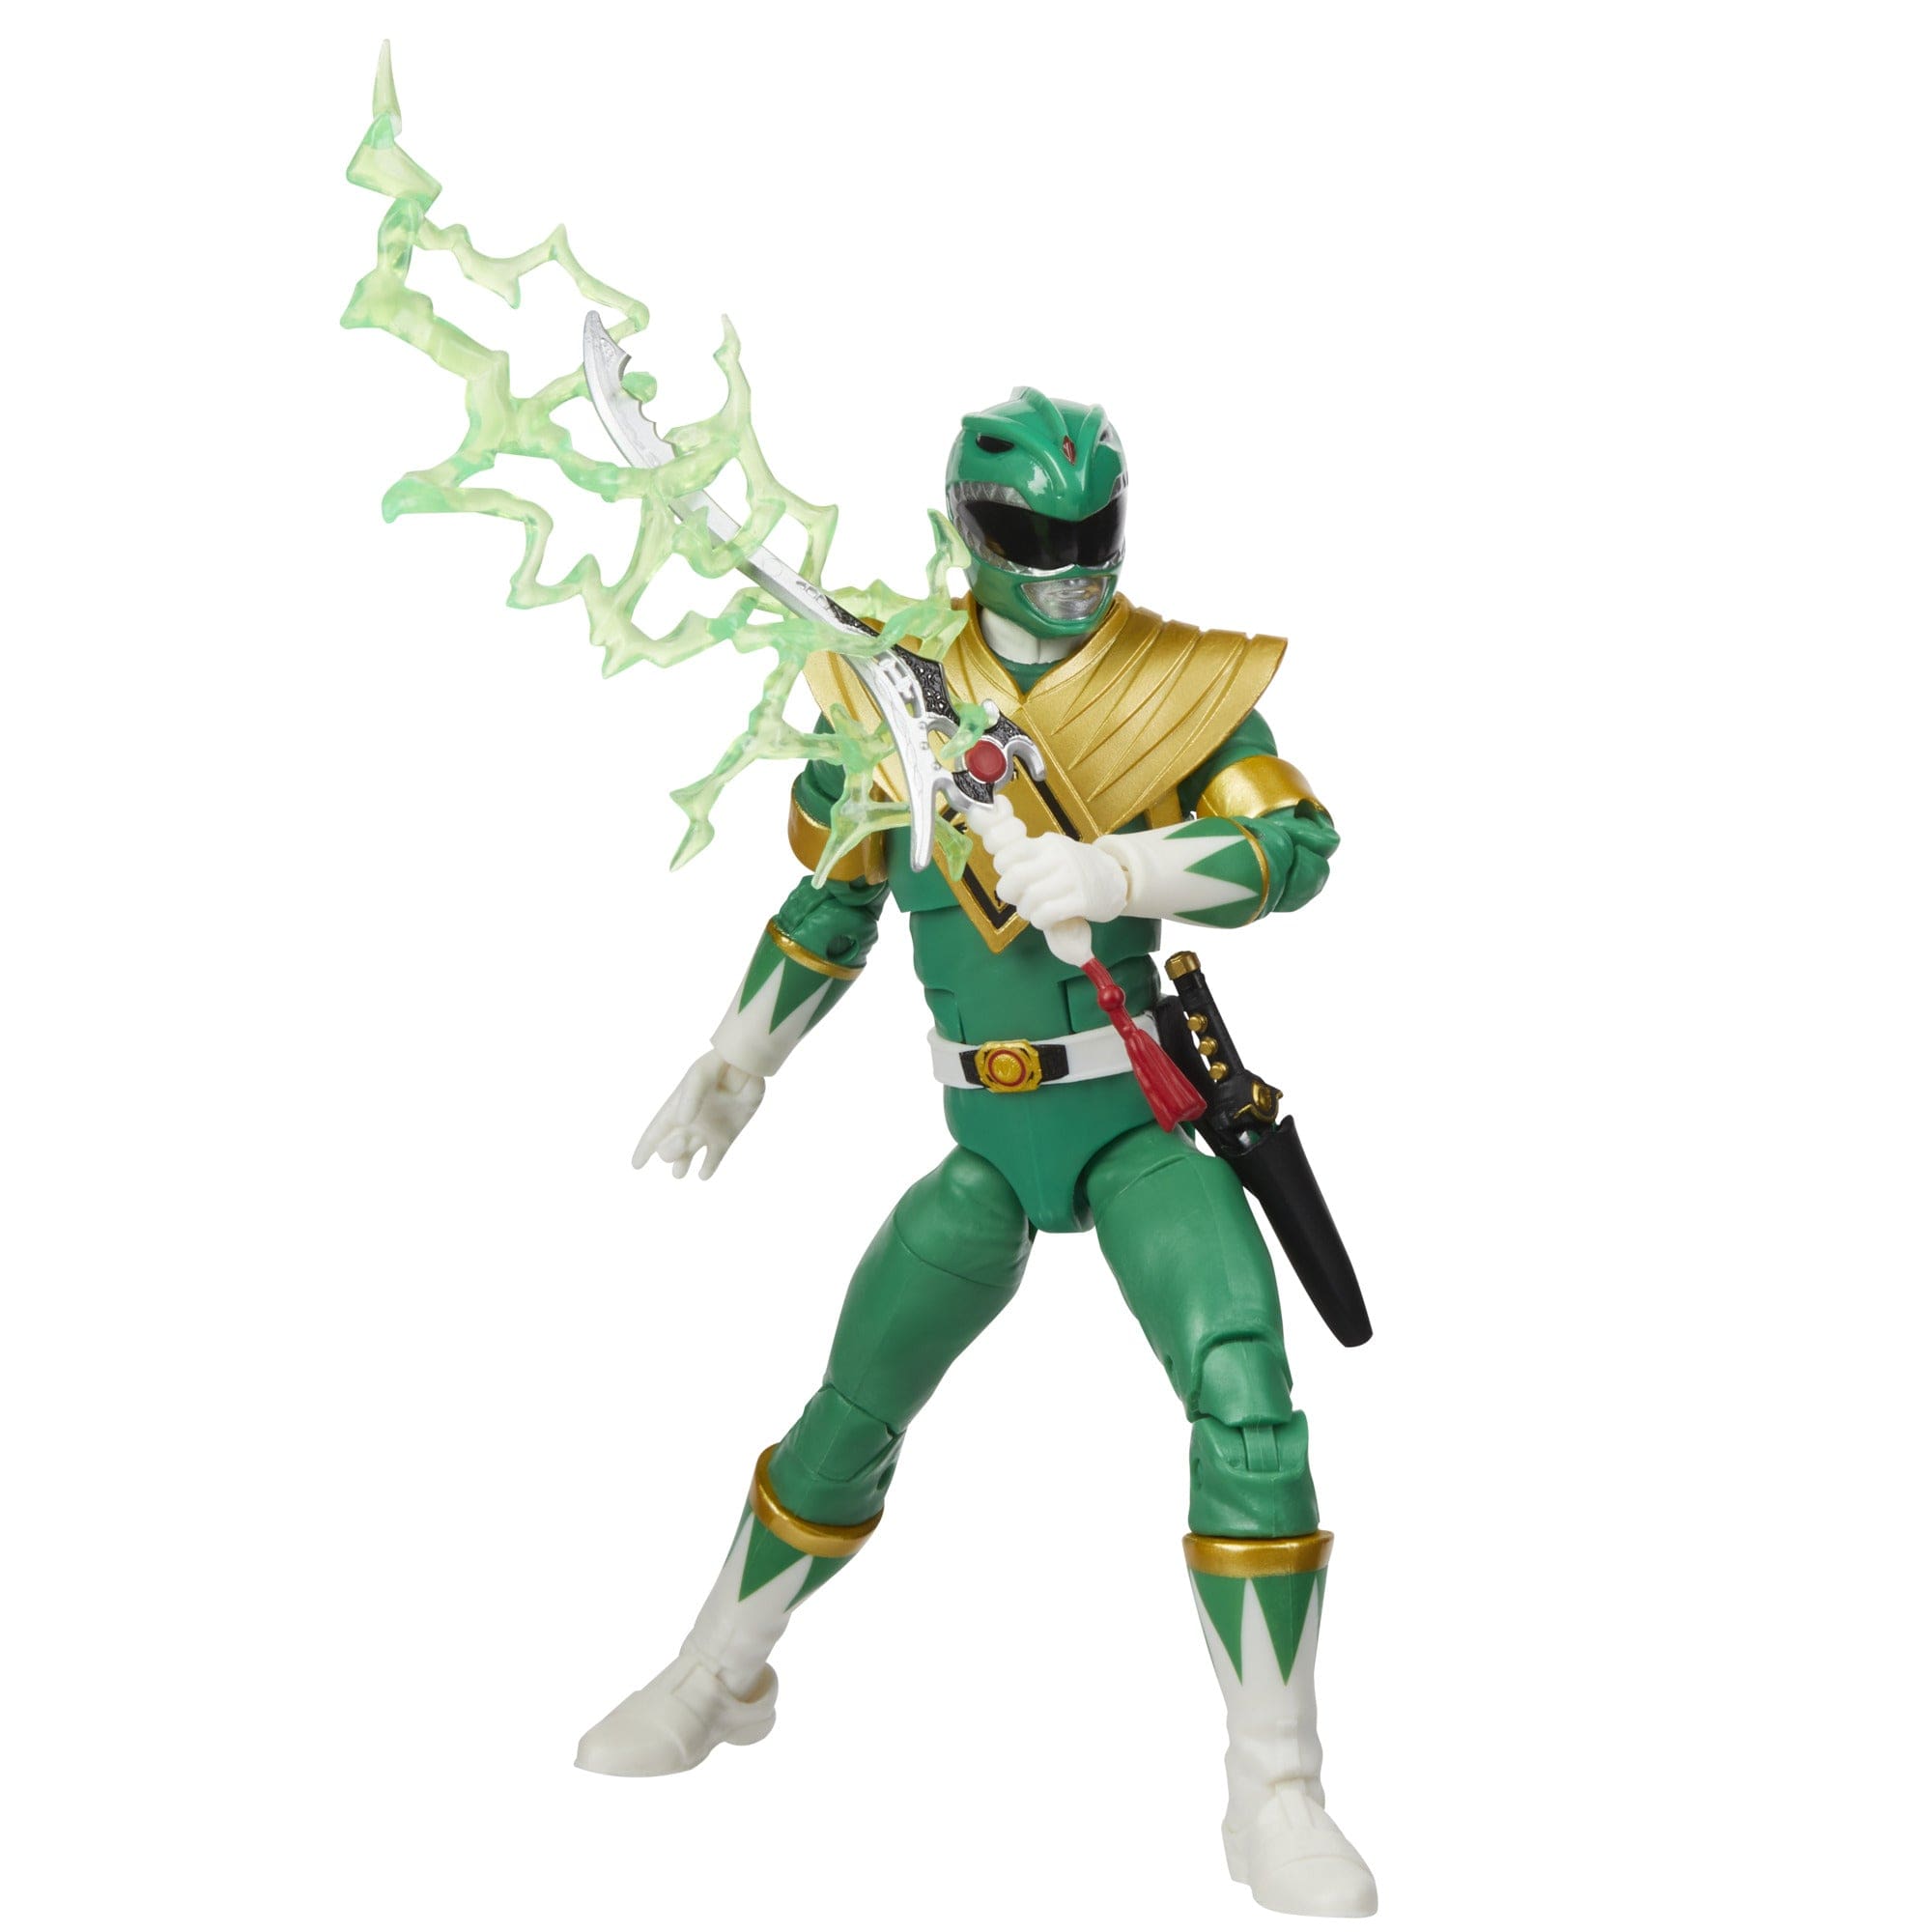 Original Power Rangers WILD FORCE GREEN Action Figure Toy